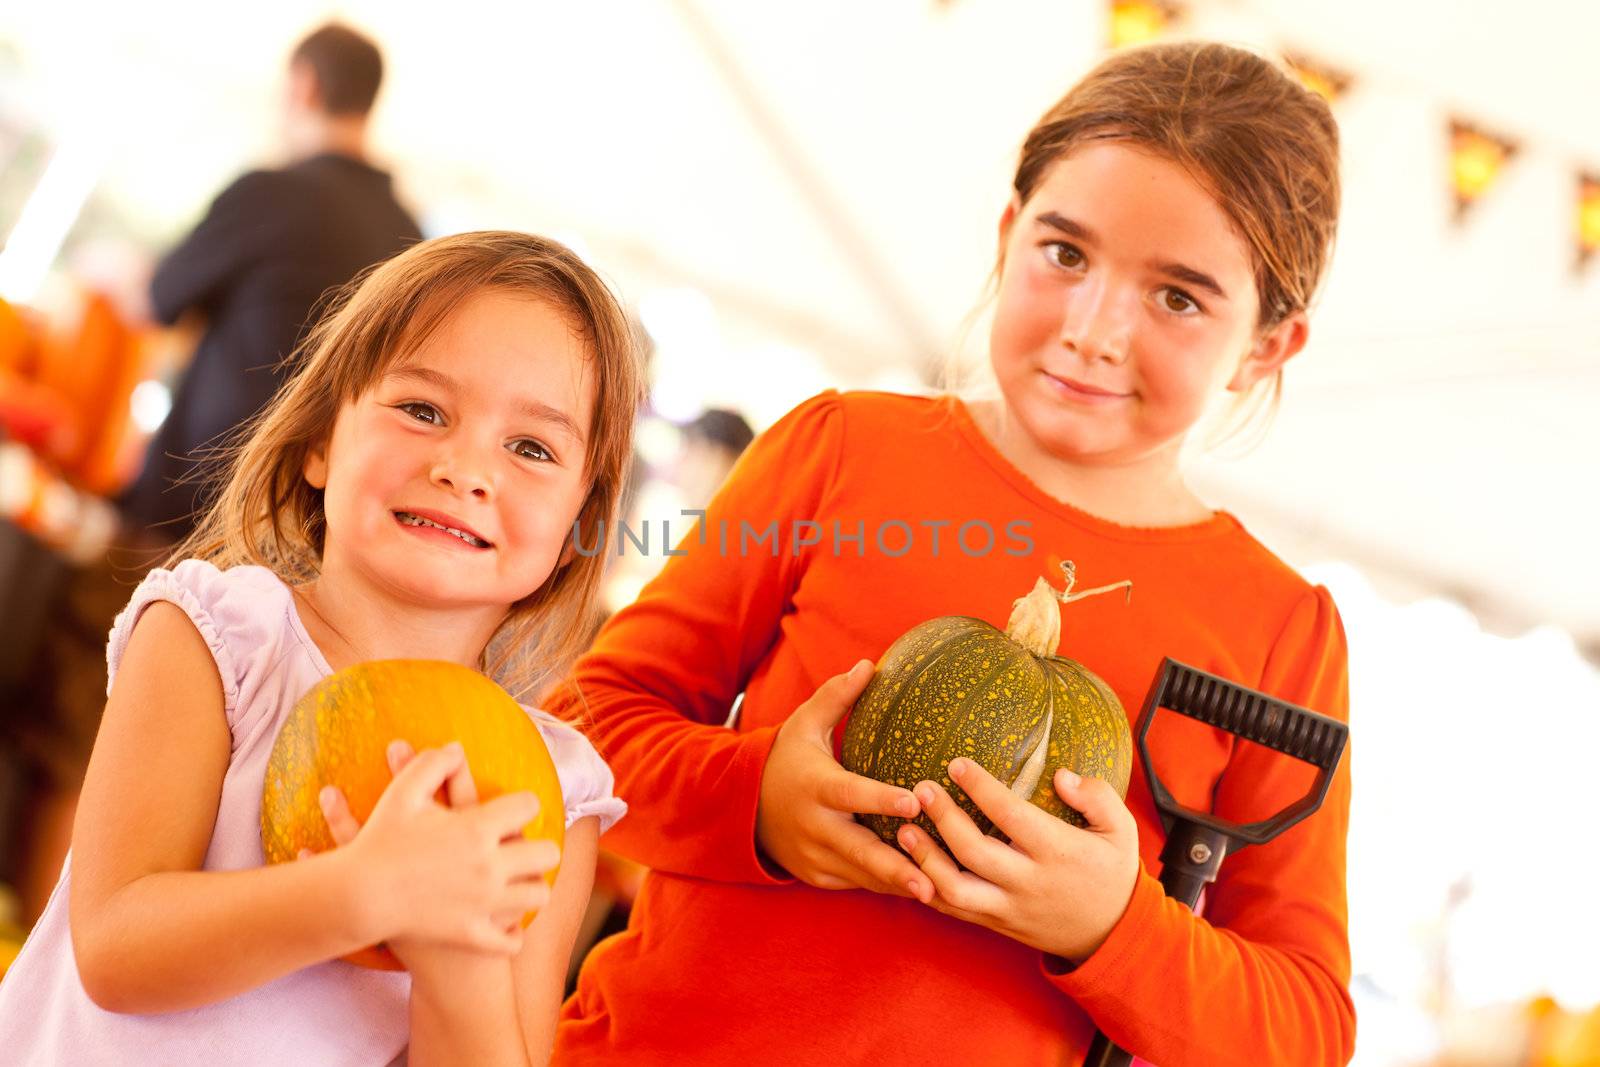 Cute Little Girls Holding Their Pumpkins At A Pumpkin Patch by Feverpitched